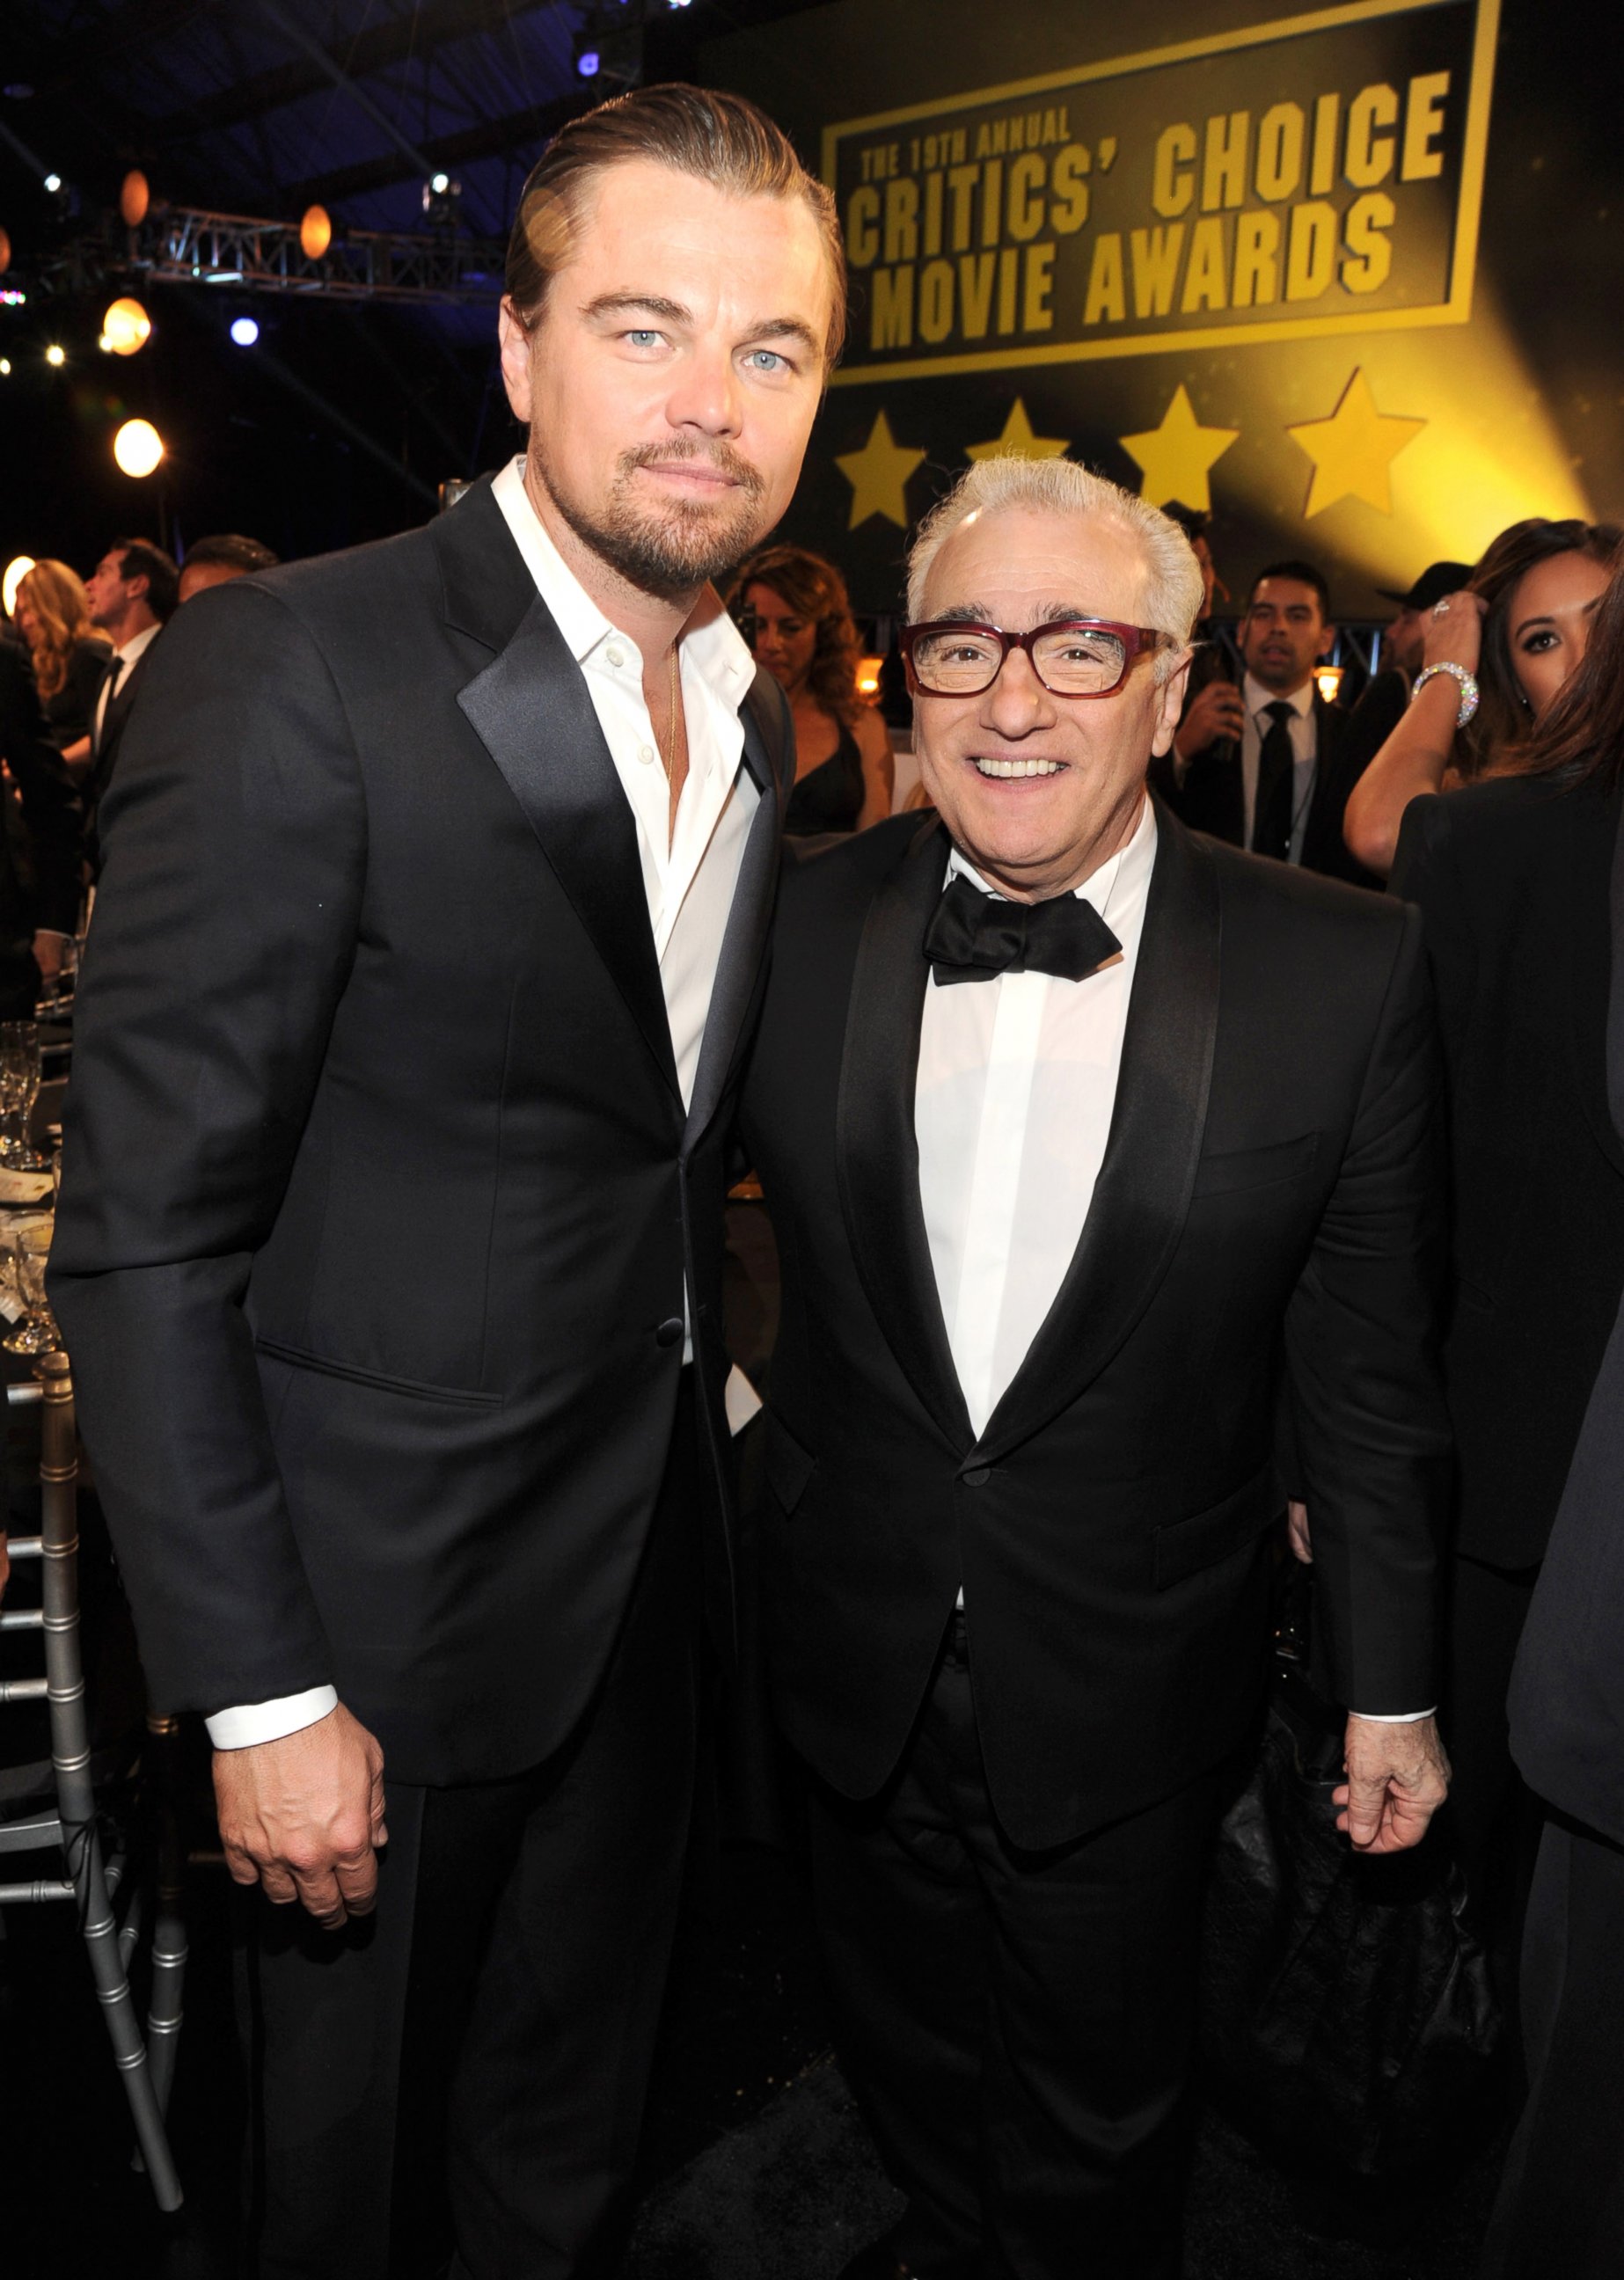 PHOTO: Leonardo DiCaprio and Martin Scorsese attend the19th Annual Critics' Choice Movie Awards at Barker Hangar, Jan. 16, 2014 in Santa Monica, Calif.